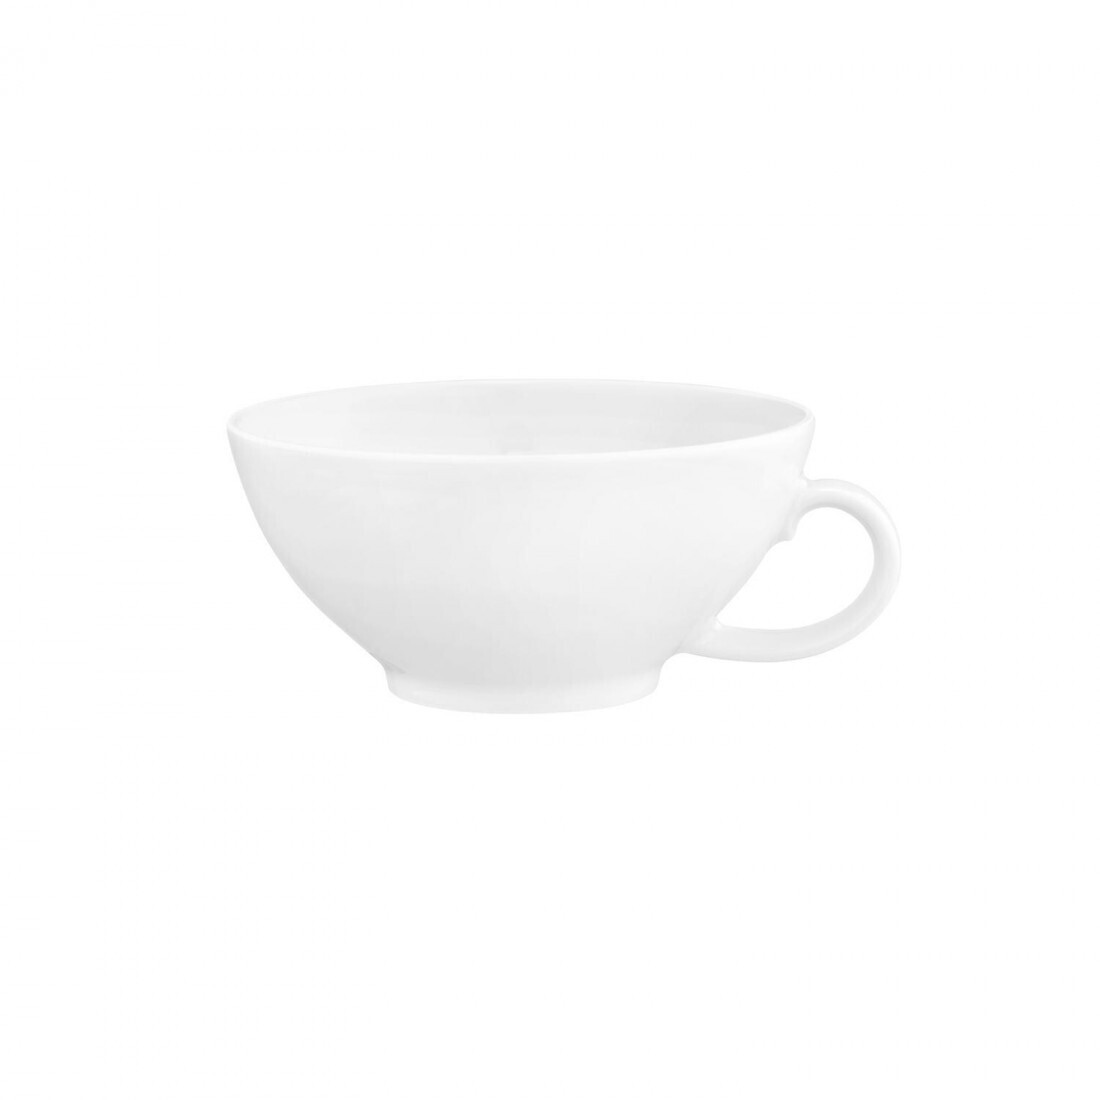 Seltmann - Coup fine dinning - Tazza da tè 0,14 l Bianco